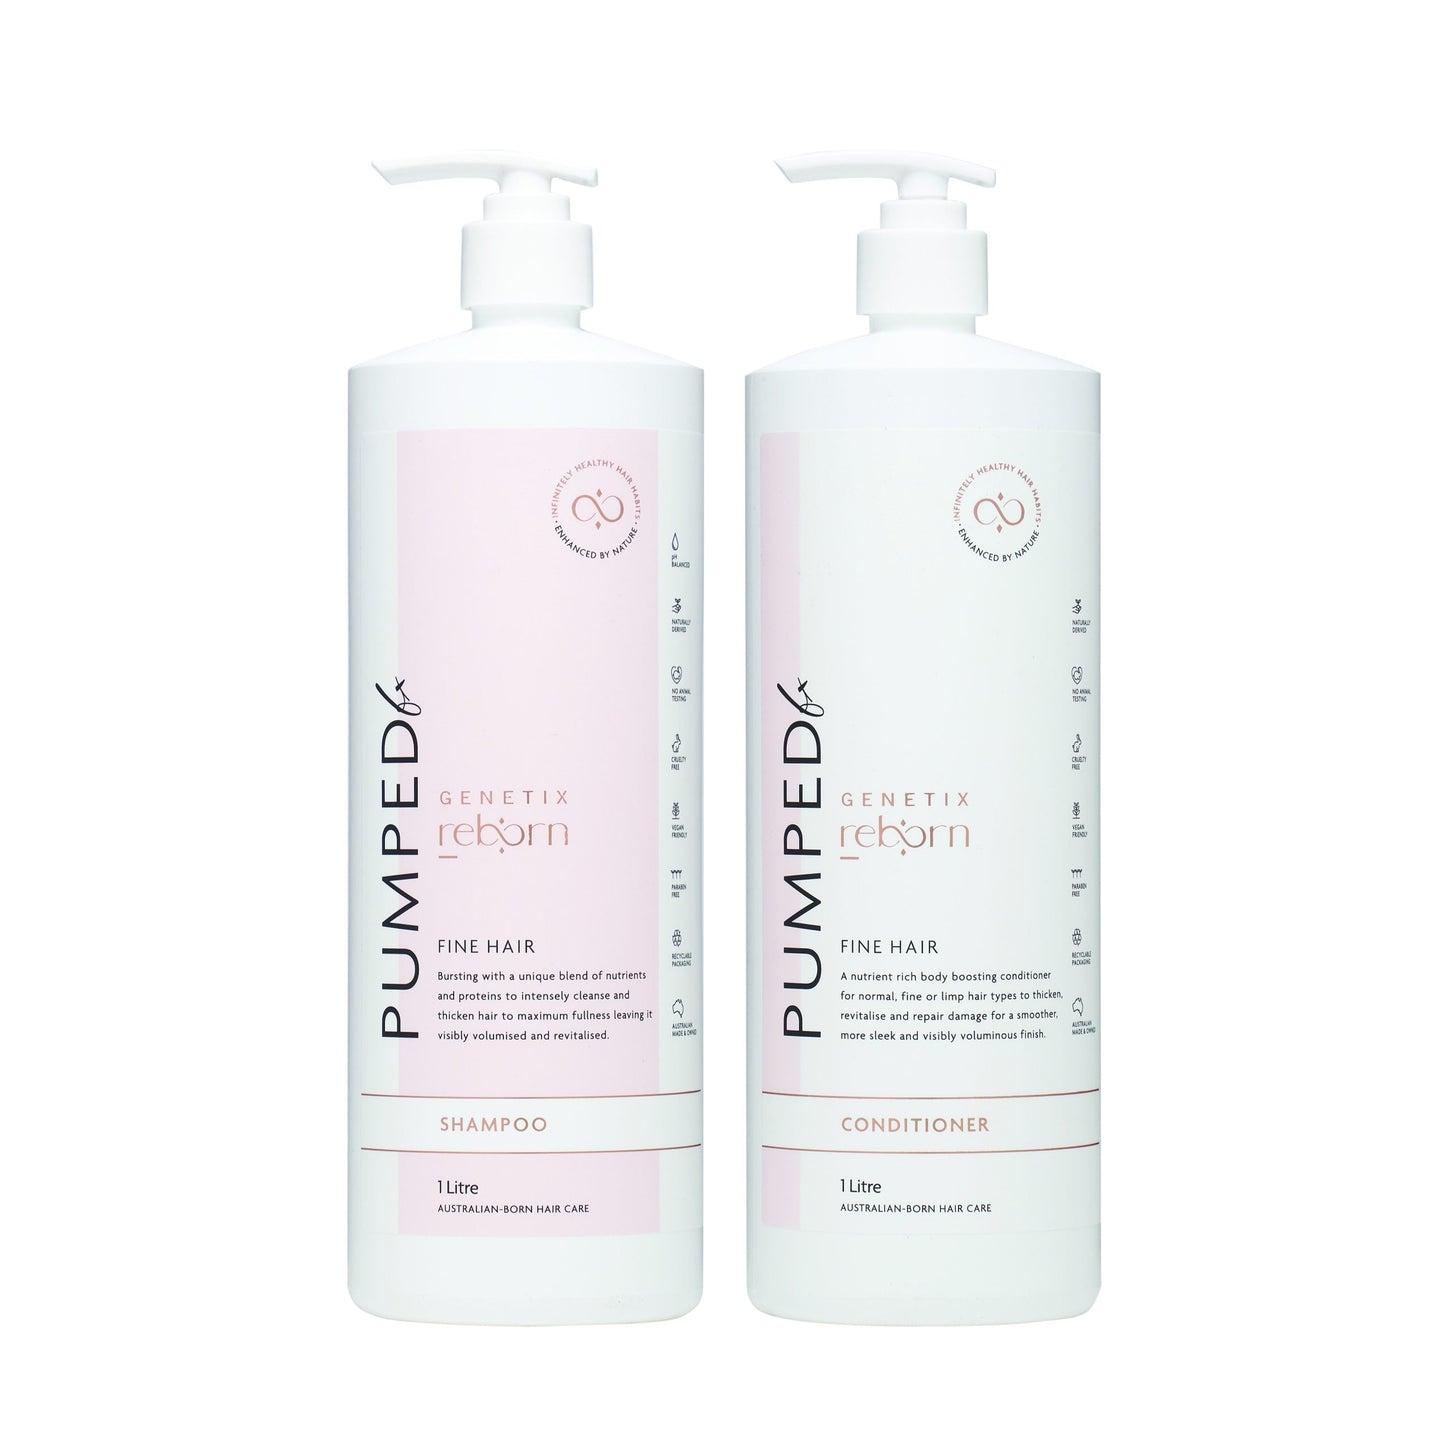 Genetix Reborn PUMPED FX Shampoo 300ml | 1 Litre